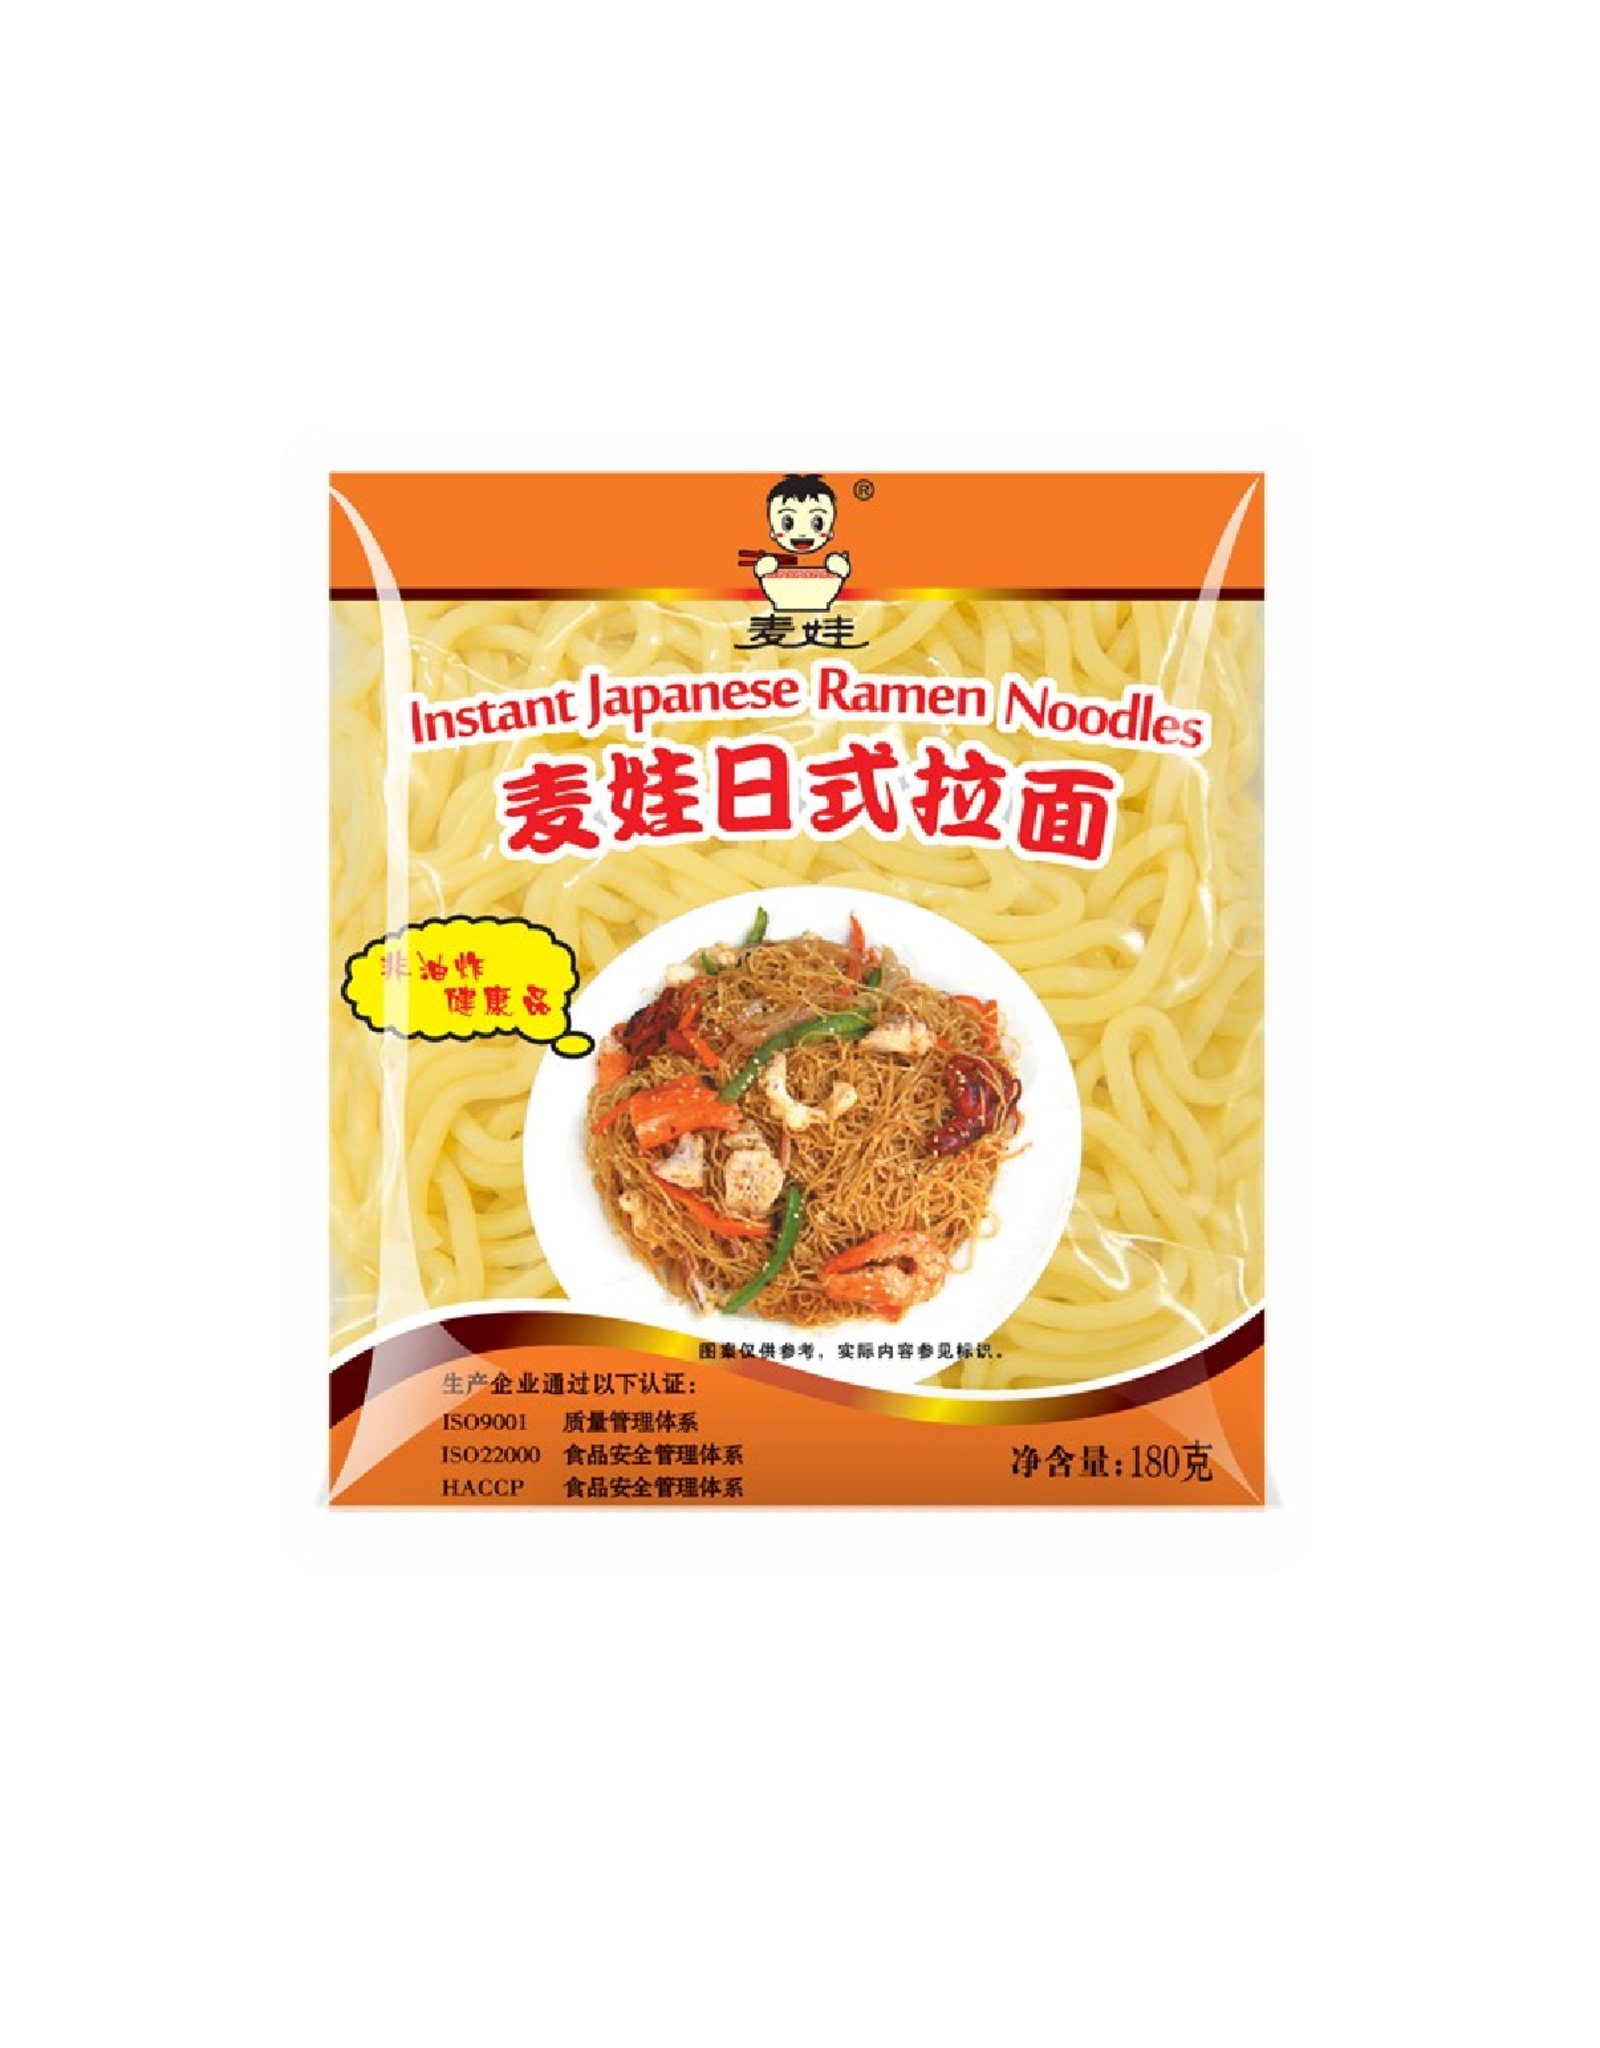 Qingdao Instant Japanese Ramen Noodles